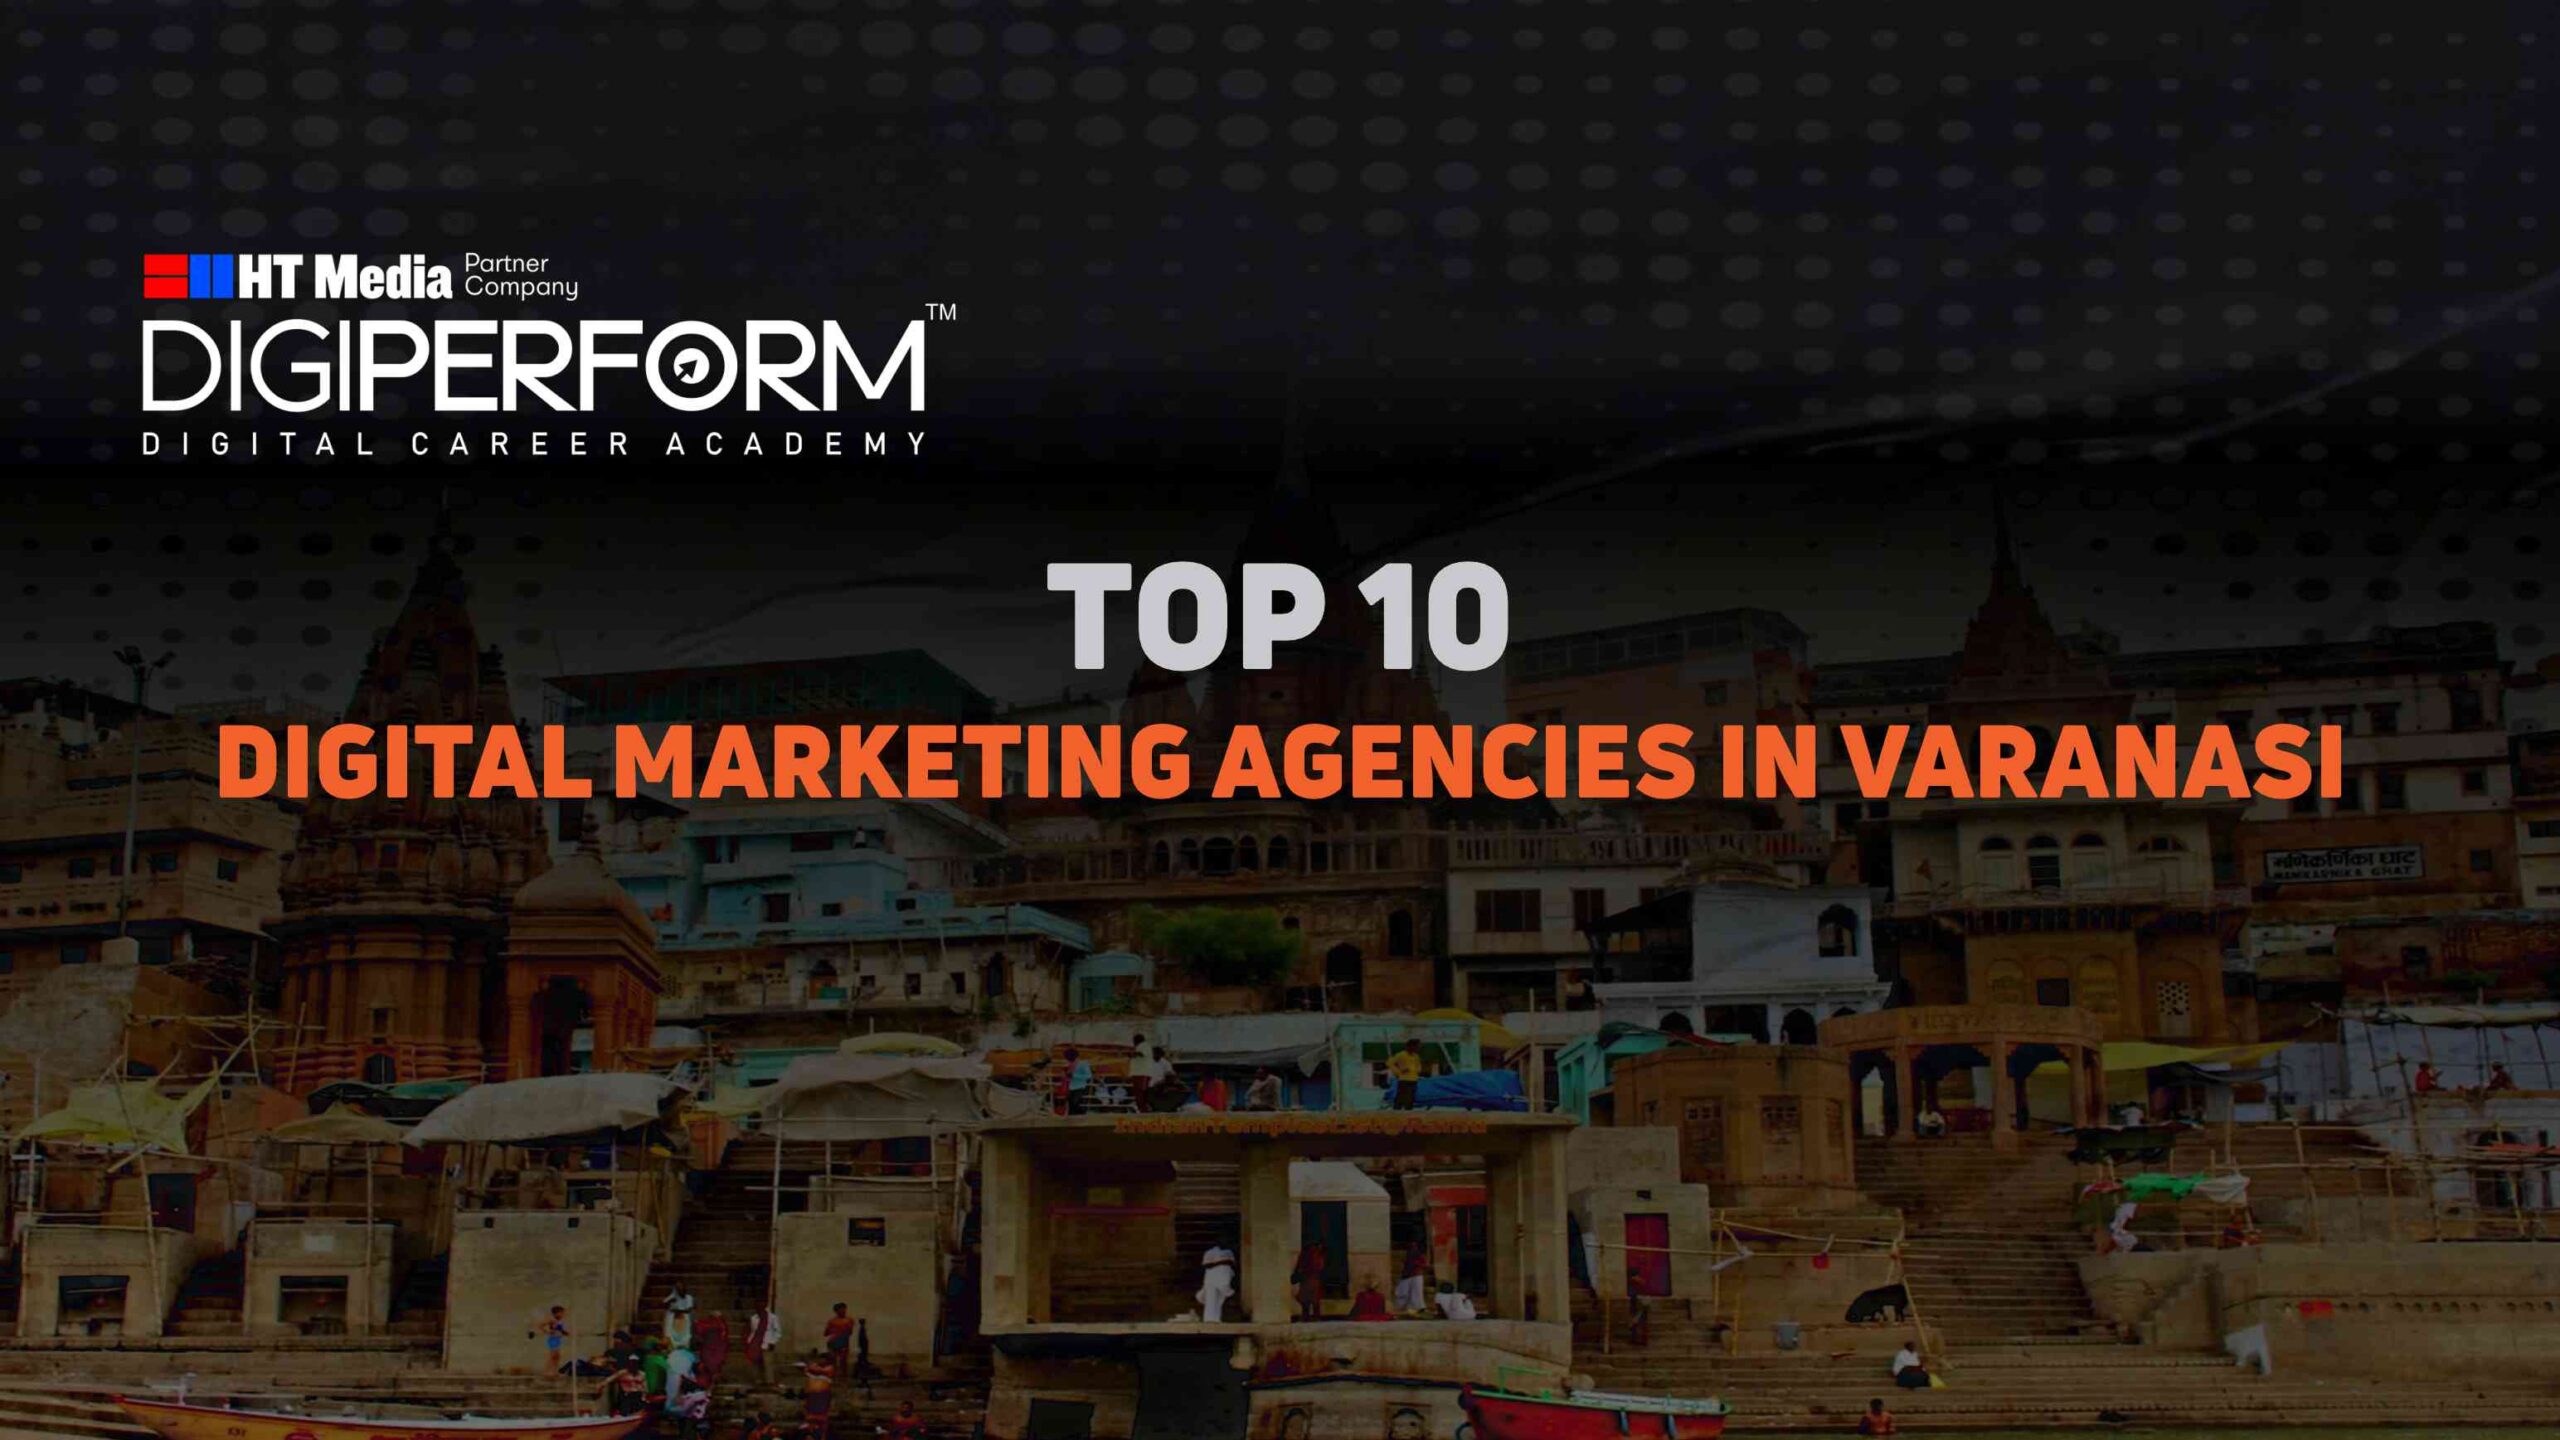 Top 10 Digital Marketing Agencies in Varanasi